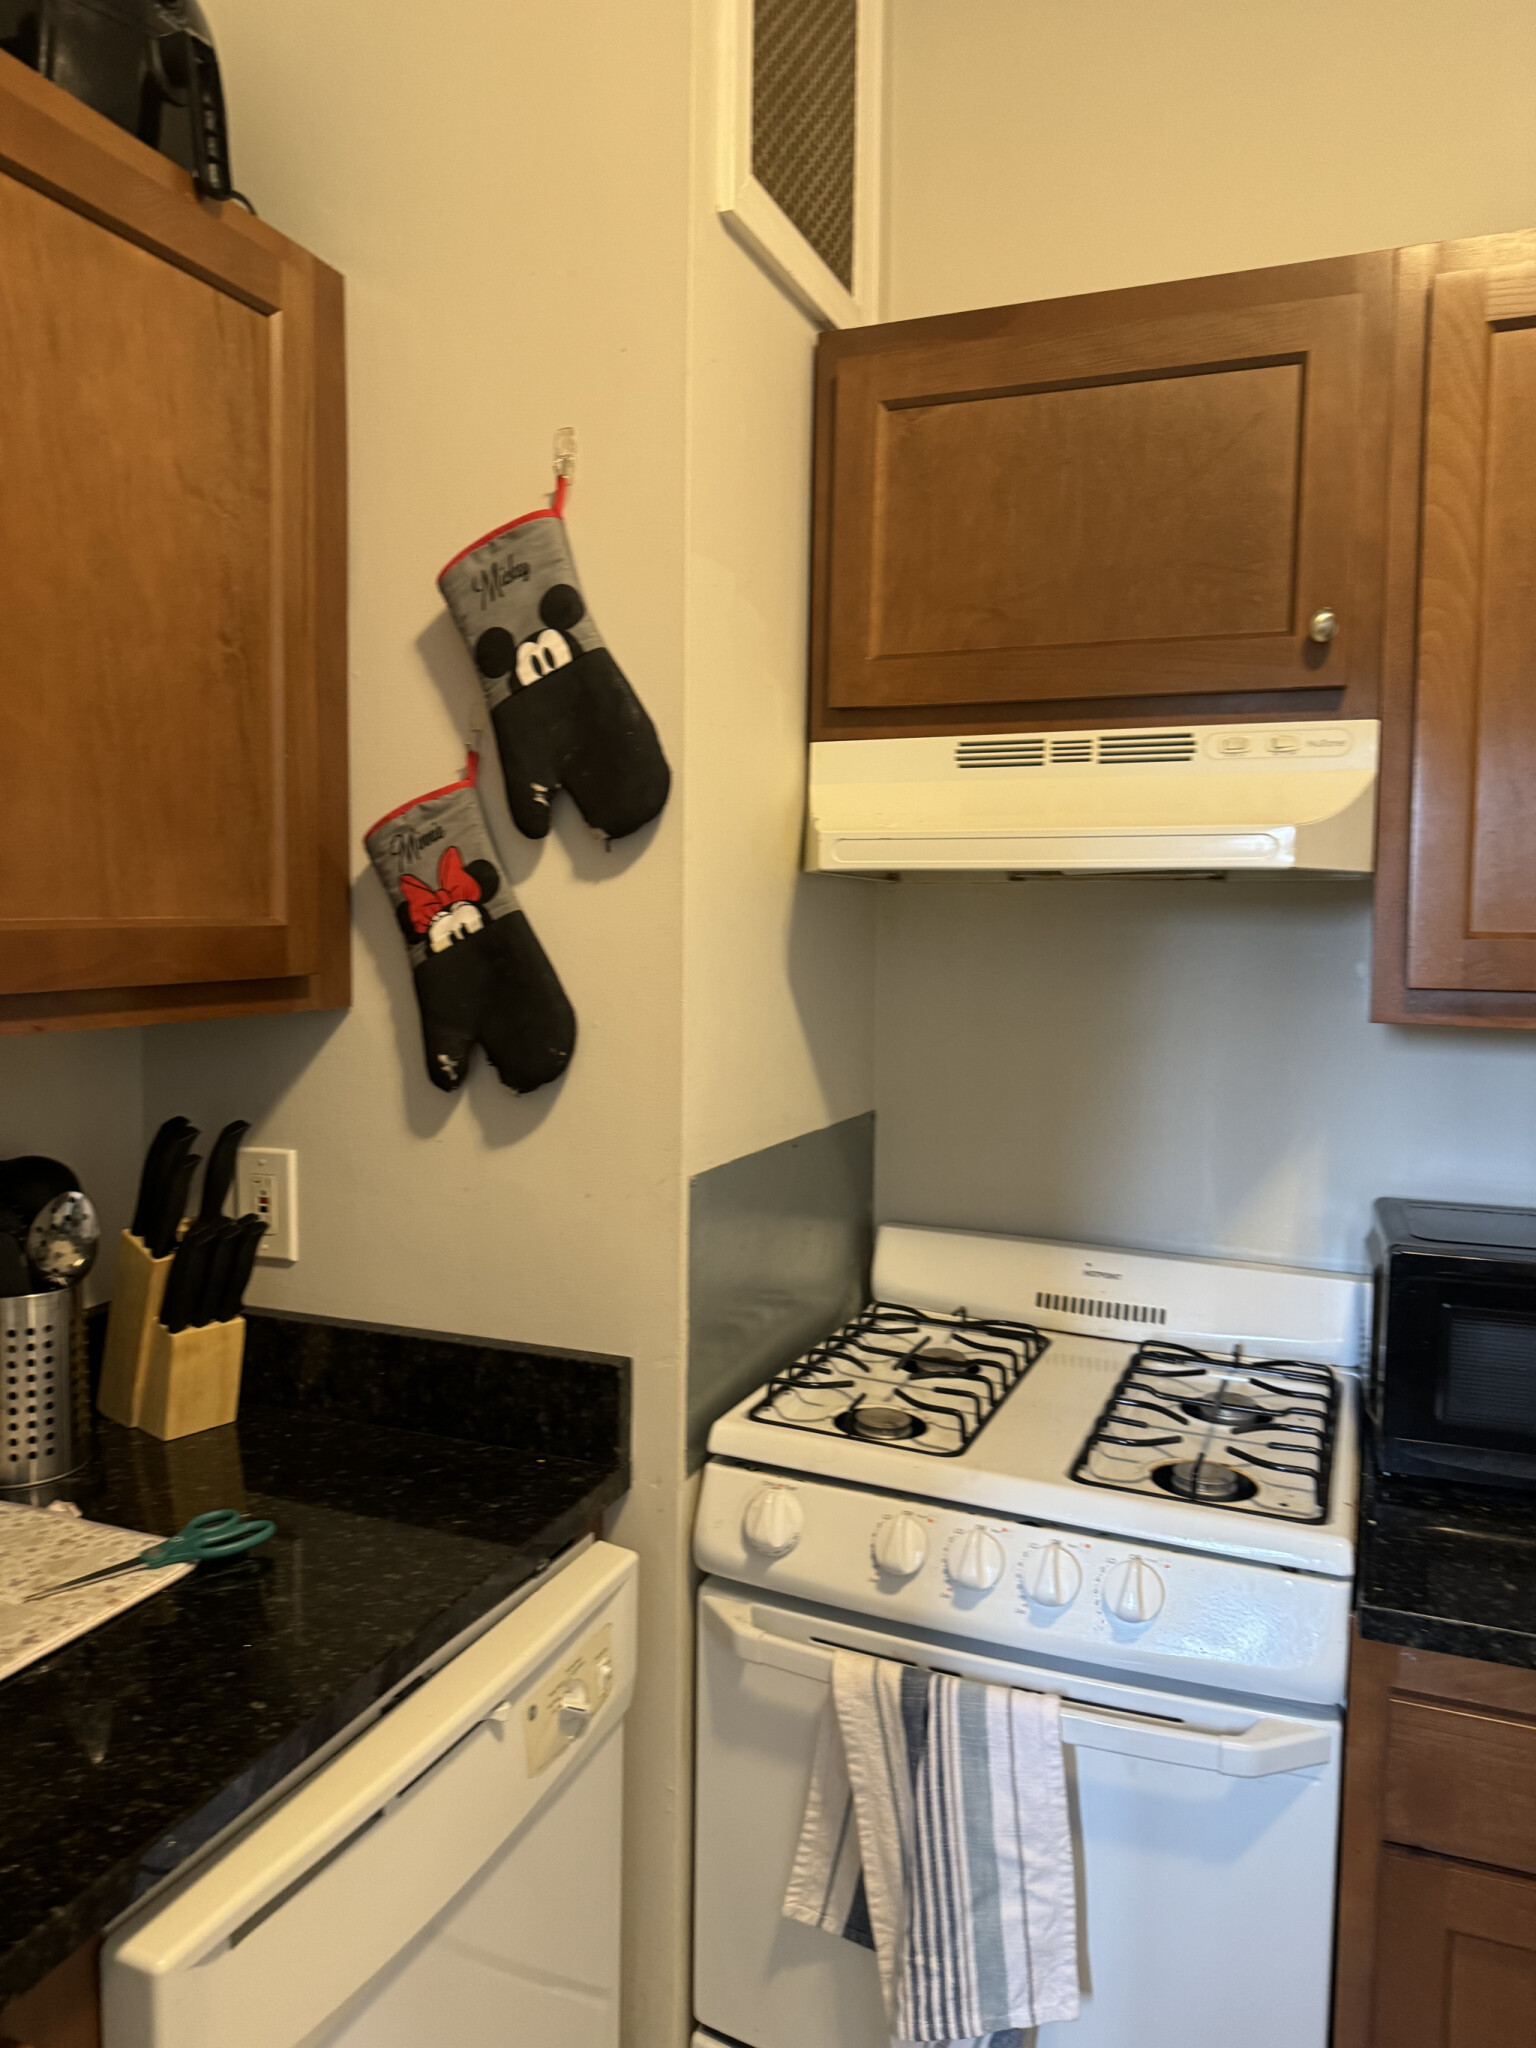 Photos of apartment on Farrington Ave.,Boston MA 02134